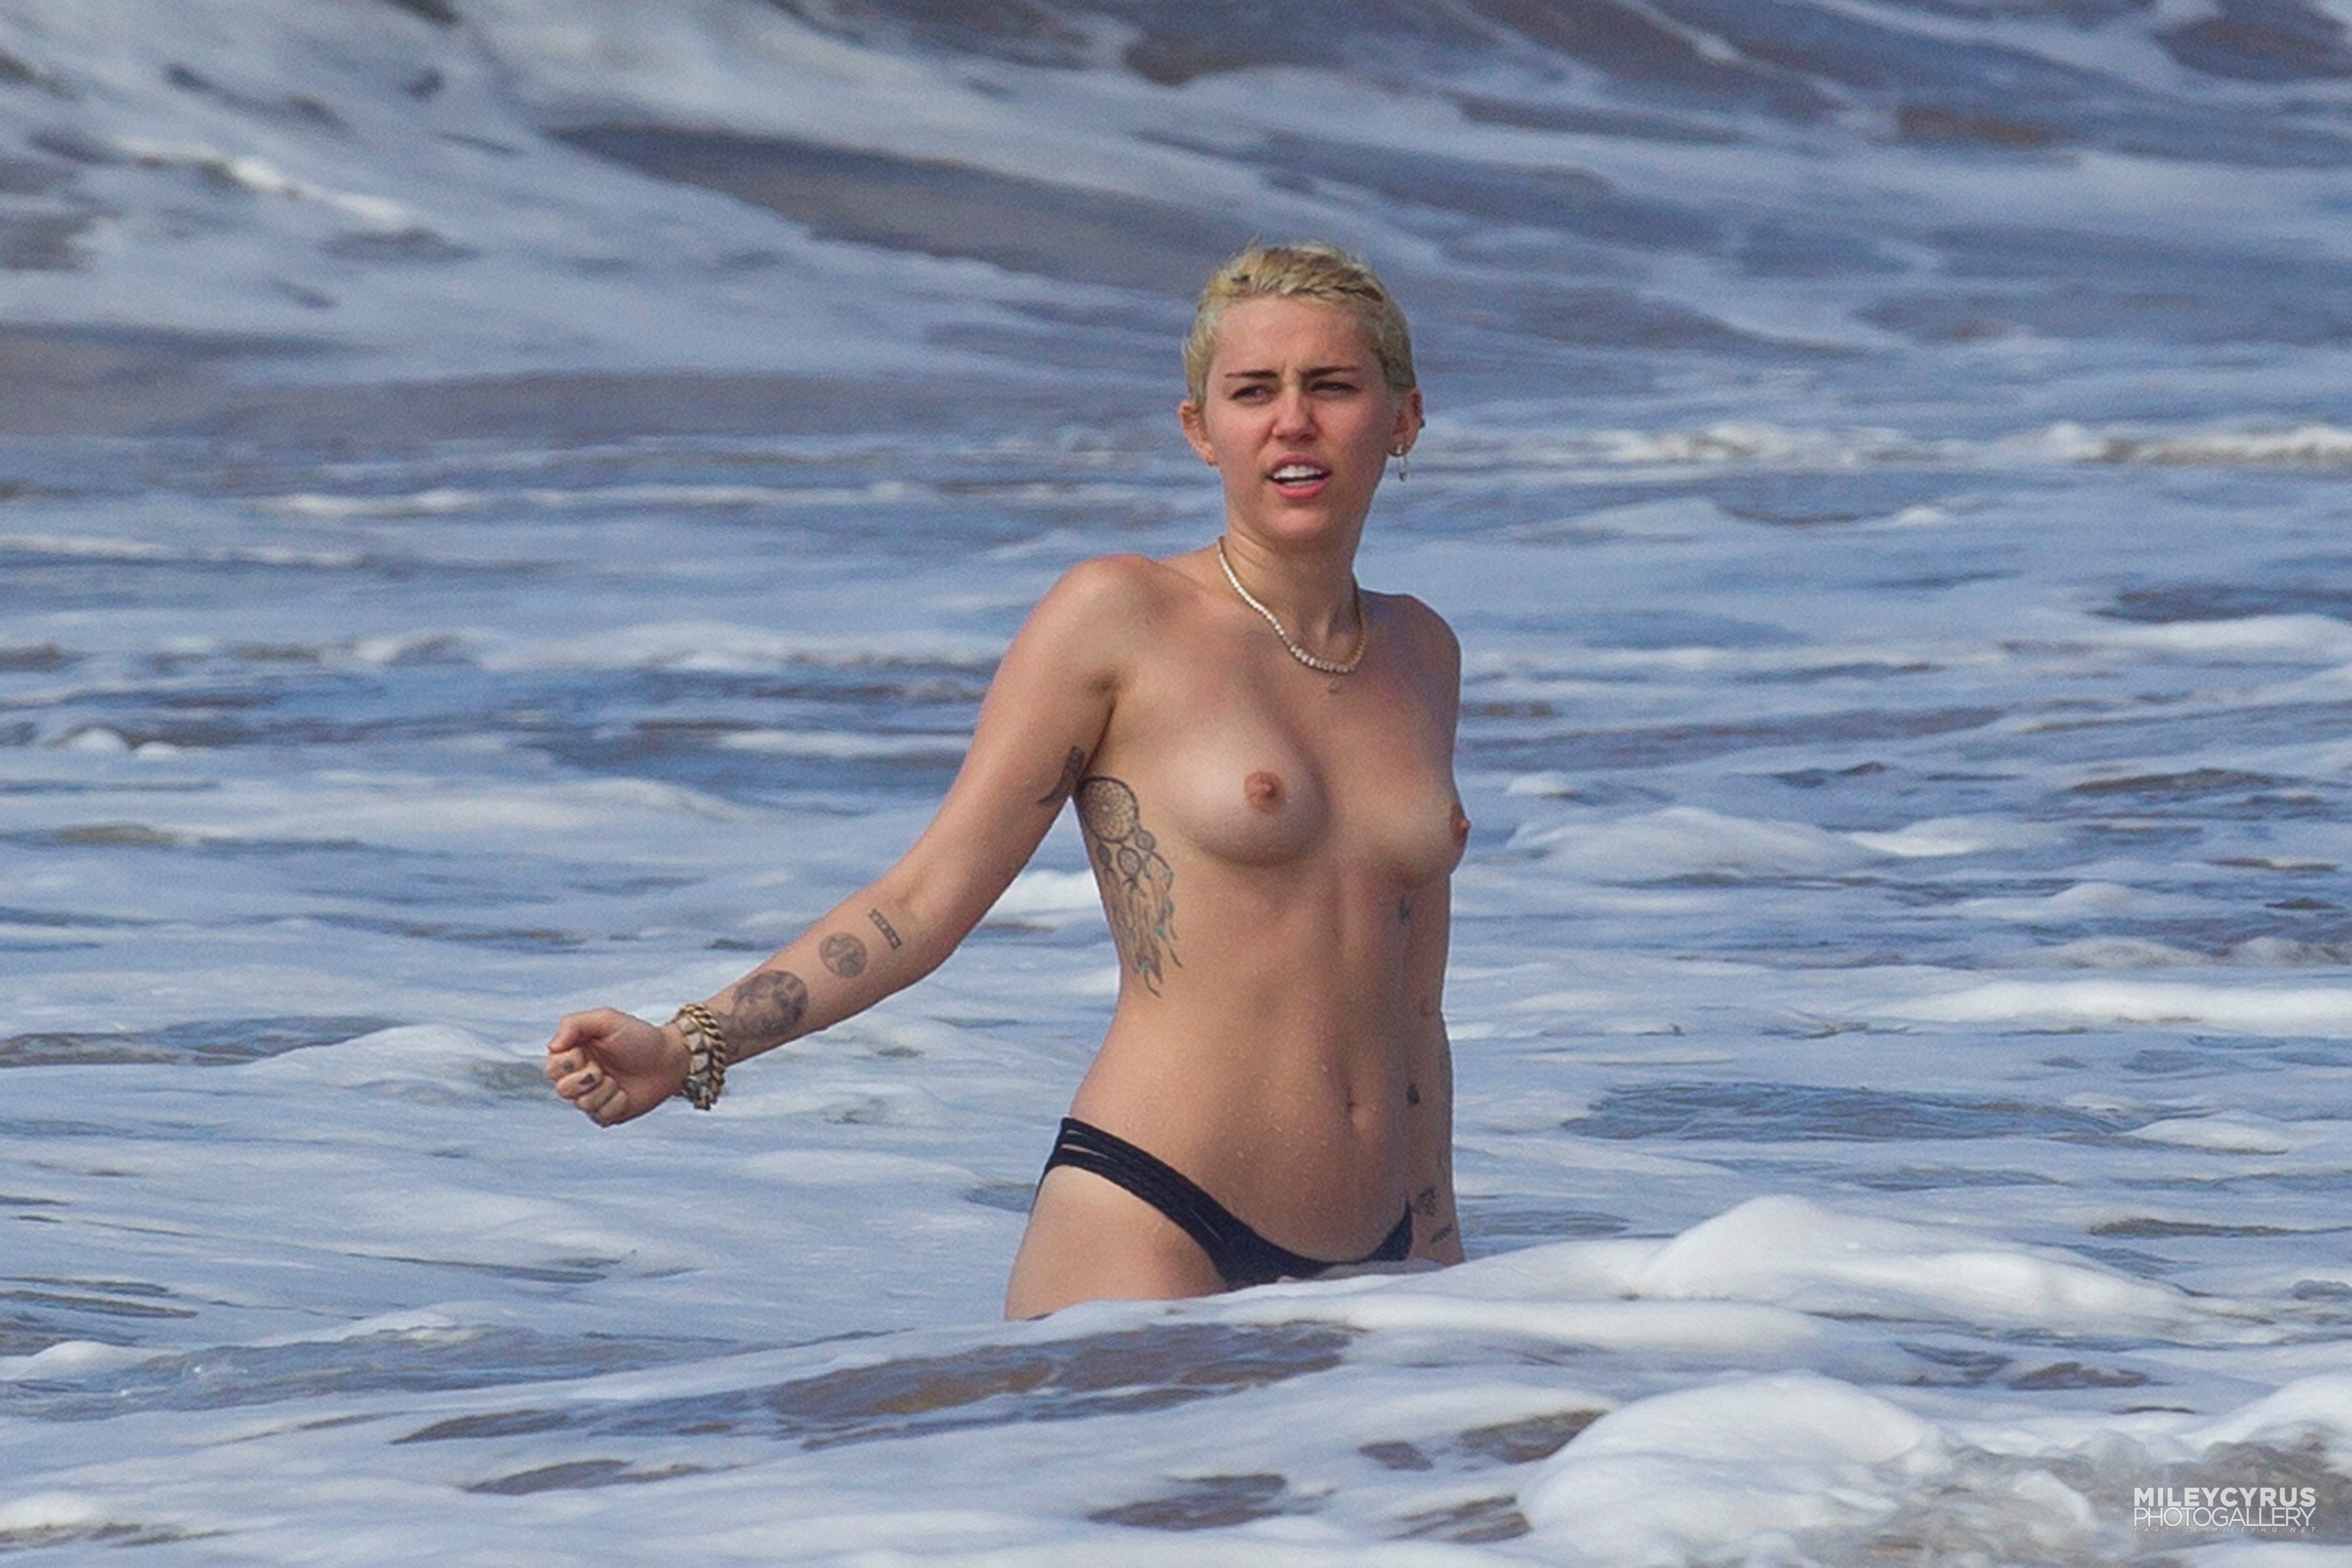 Miley cyrus real celebrity nude